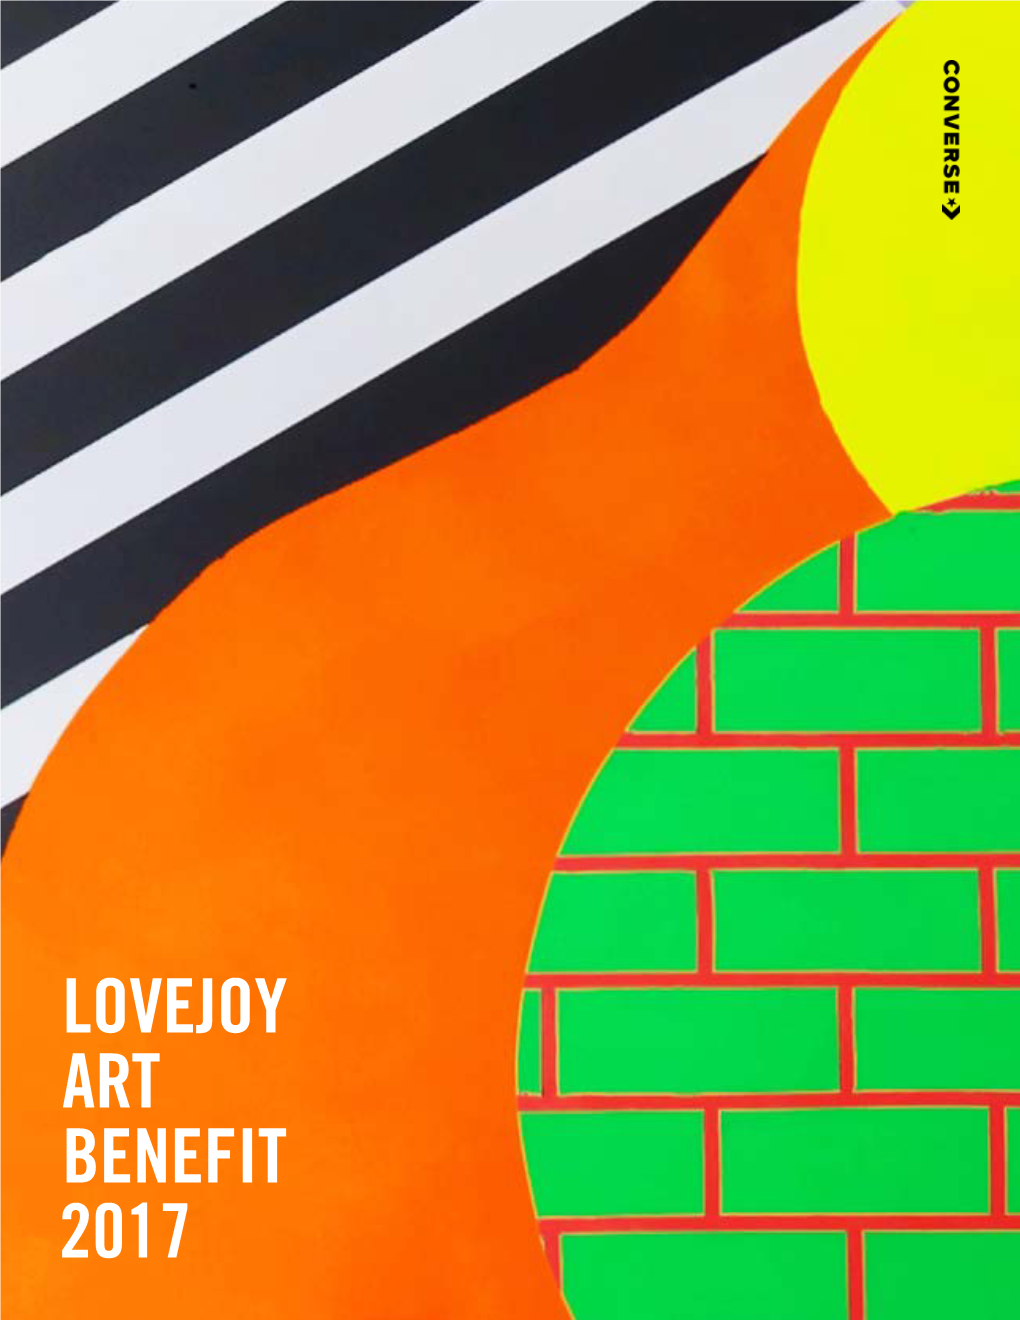 Lovejoy Art Benefit 2017